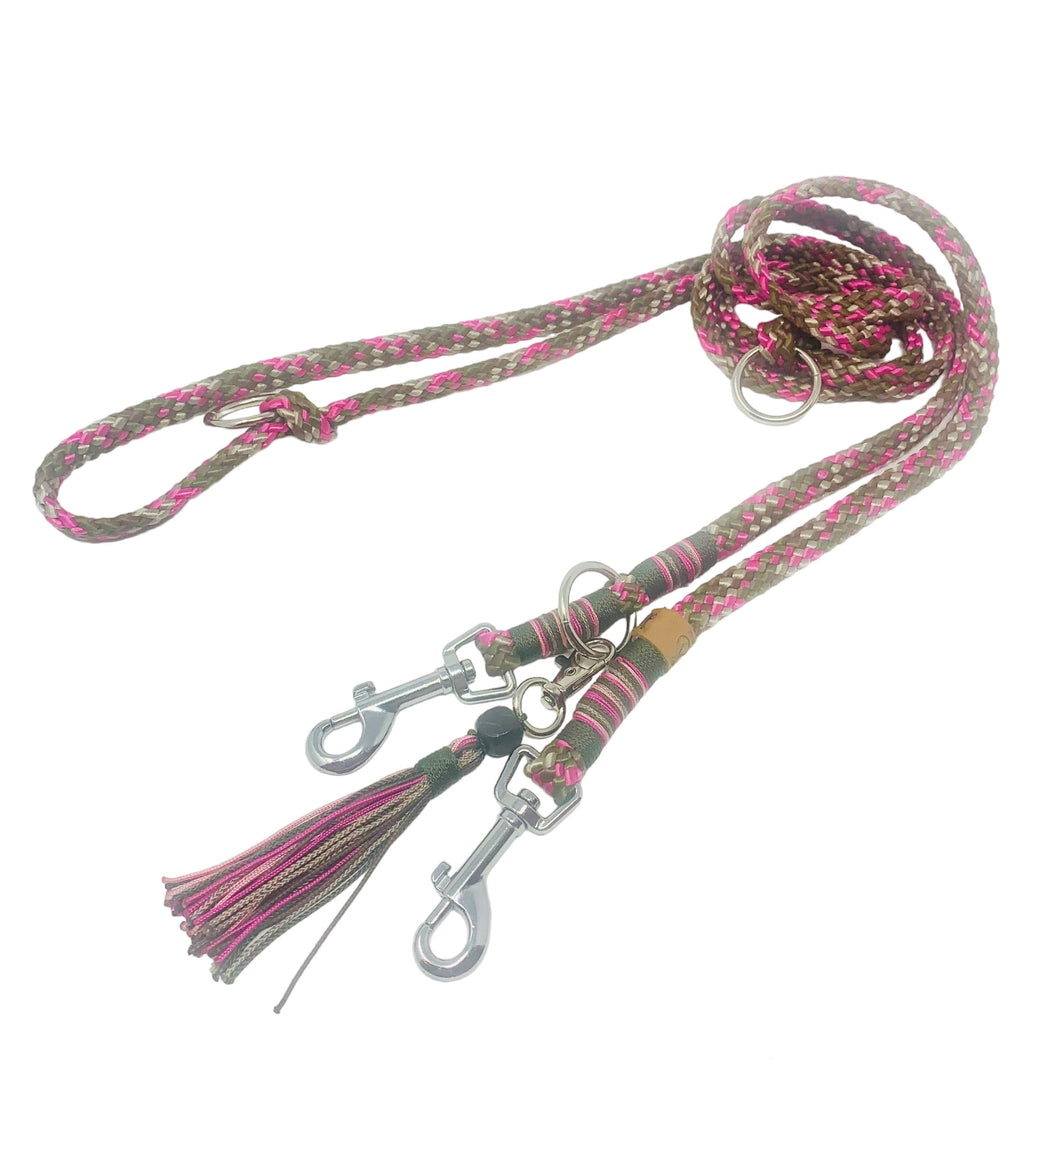 Hundeleine Seil braun-rosa-taupe silber Karabiner